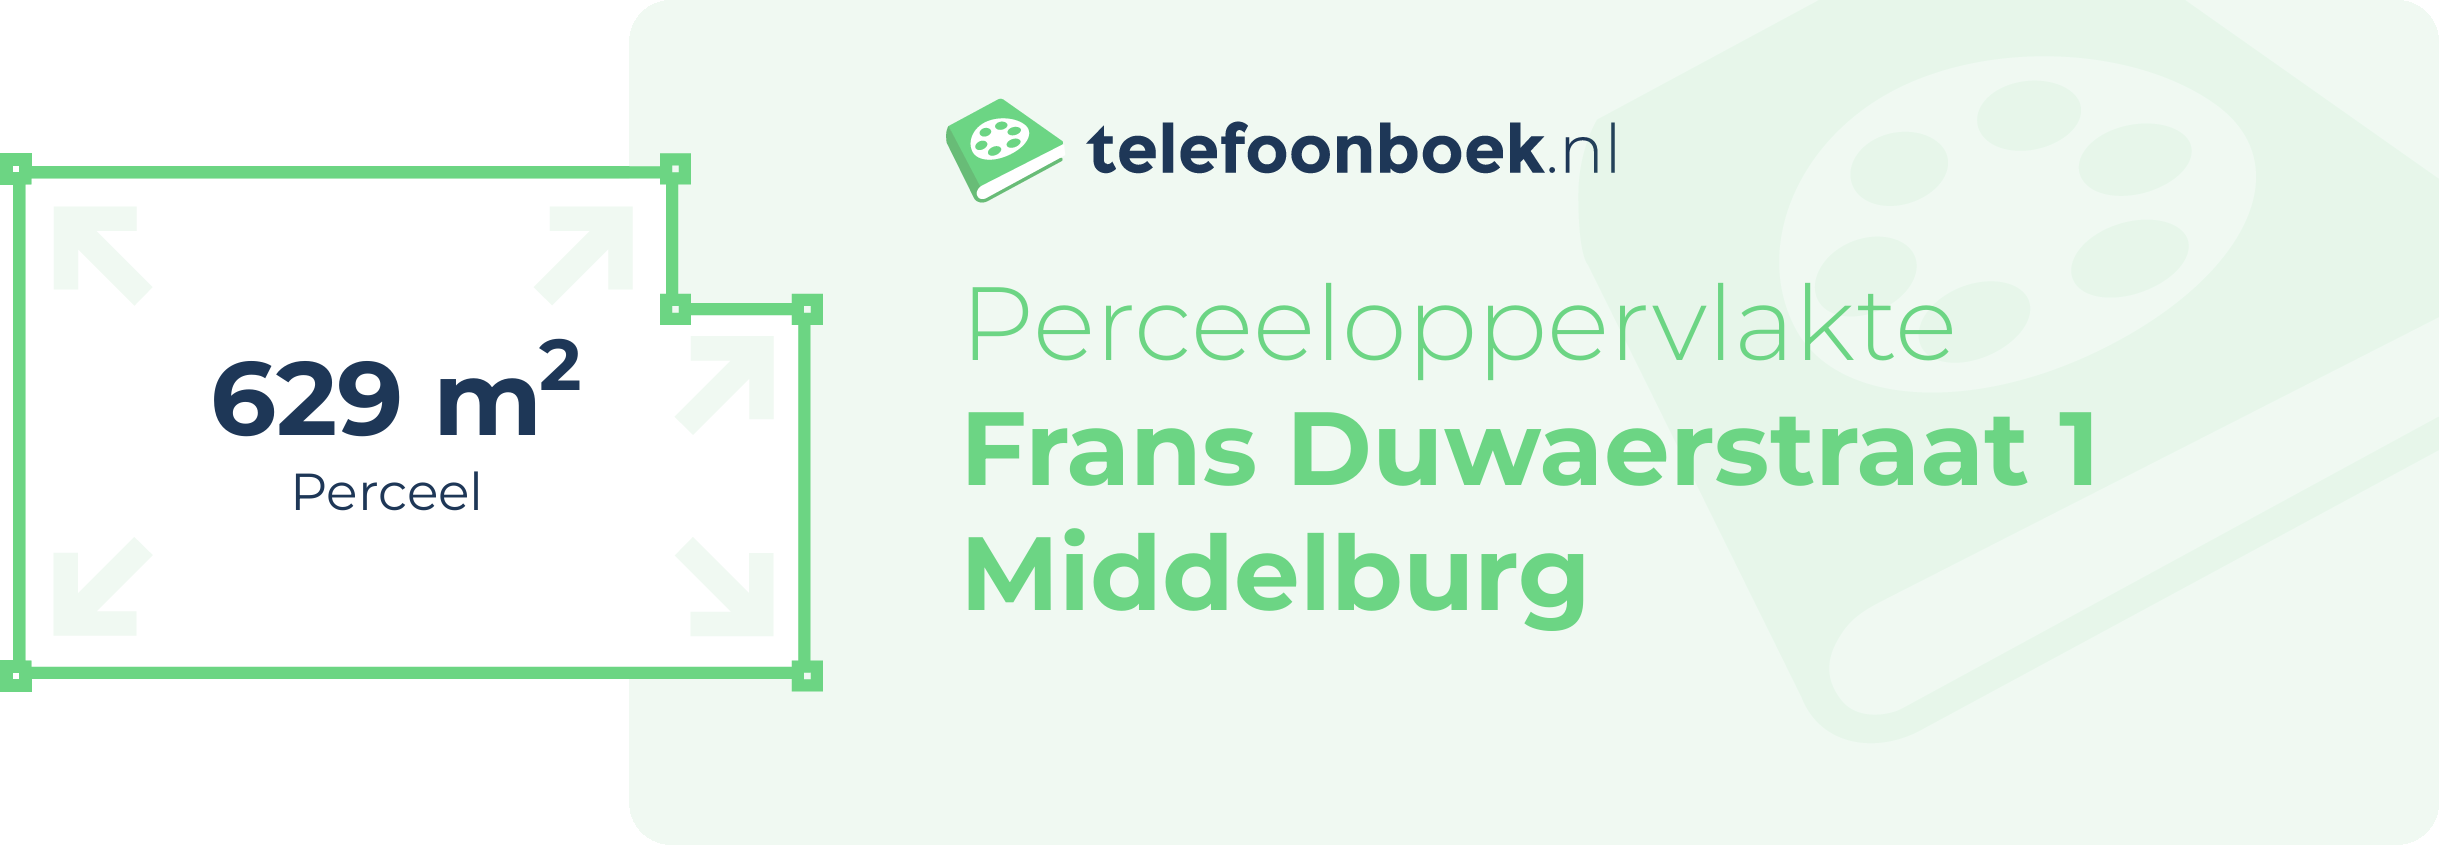 Perceeloppervlakte Frans Duwaerstraat 1 Middelburg